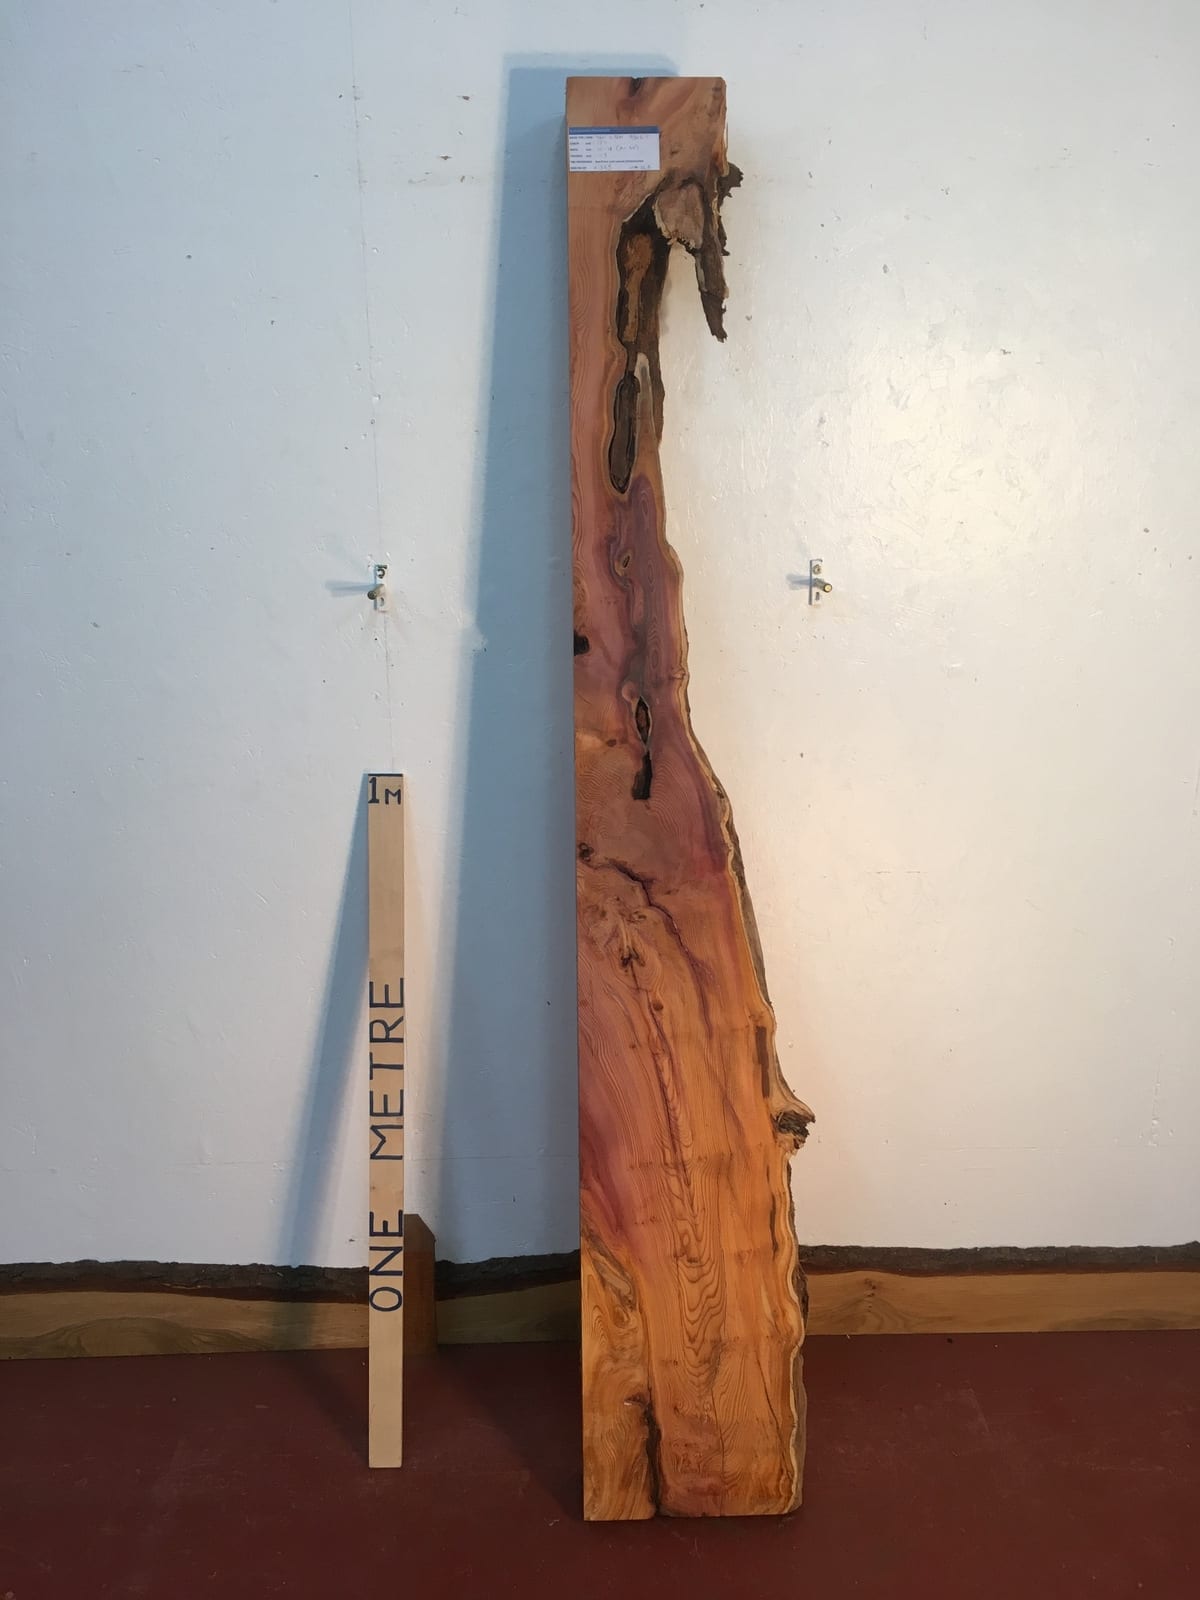 YEW 0934B-5 Single Waney Natural Live Edge Planed Hardwood Kiln Dried Seasoned Board thickness 11.5cm Wildwood Mantel